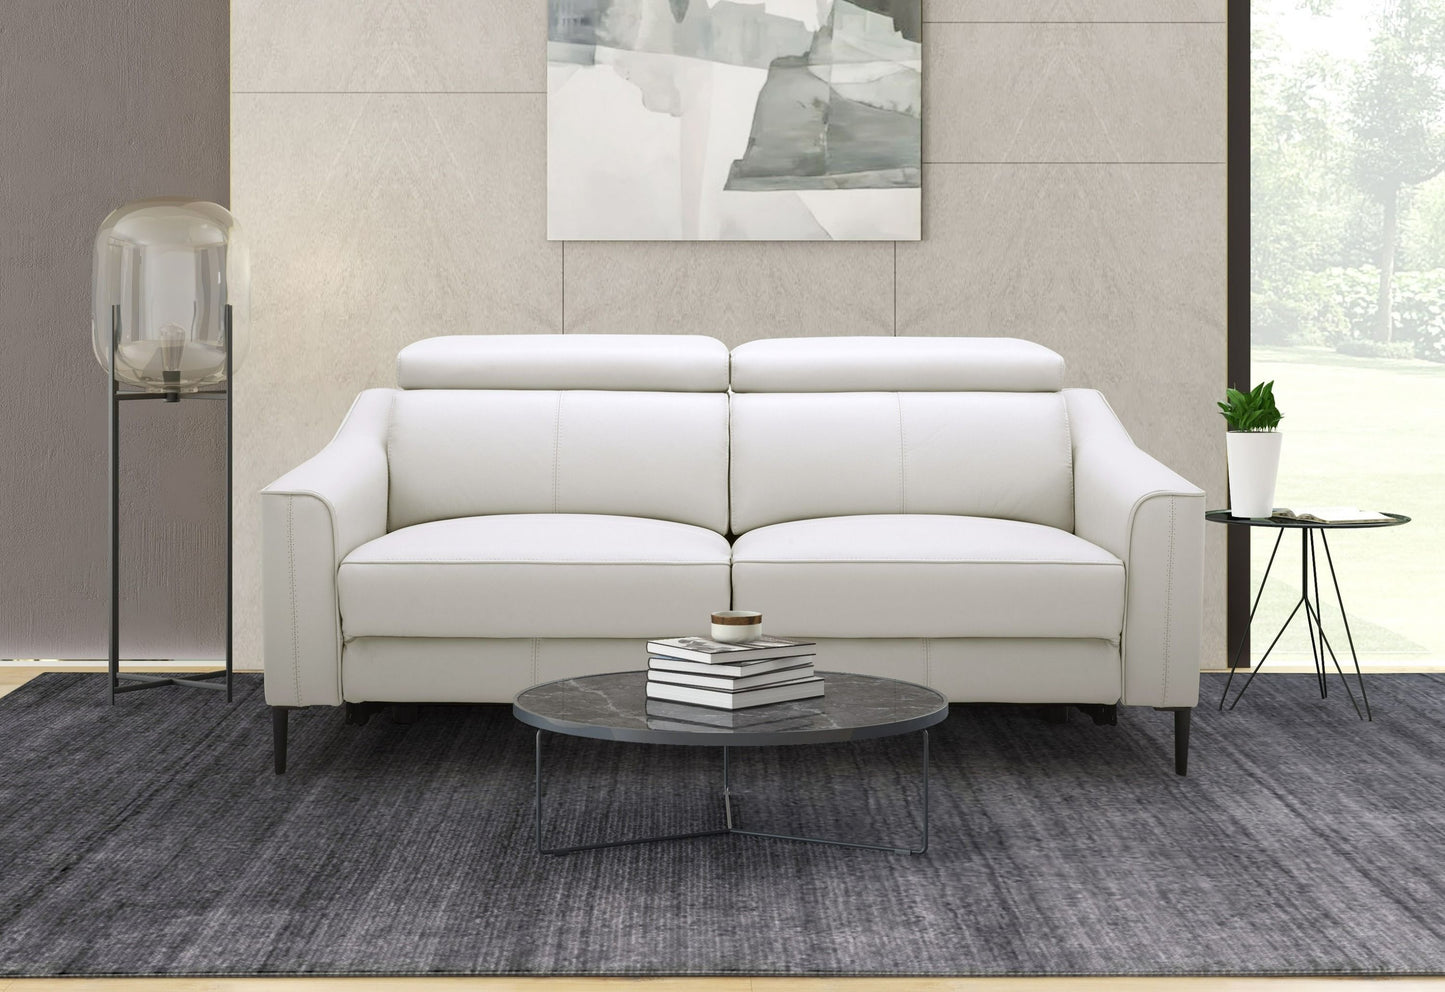 Divani Casa Eden - Modern White Leather Sofa With 2 Recliners